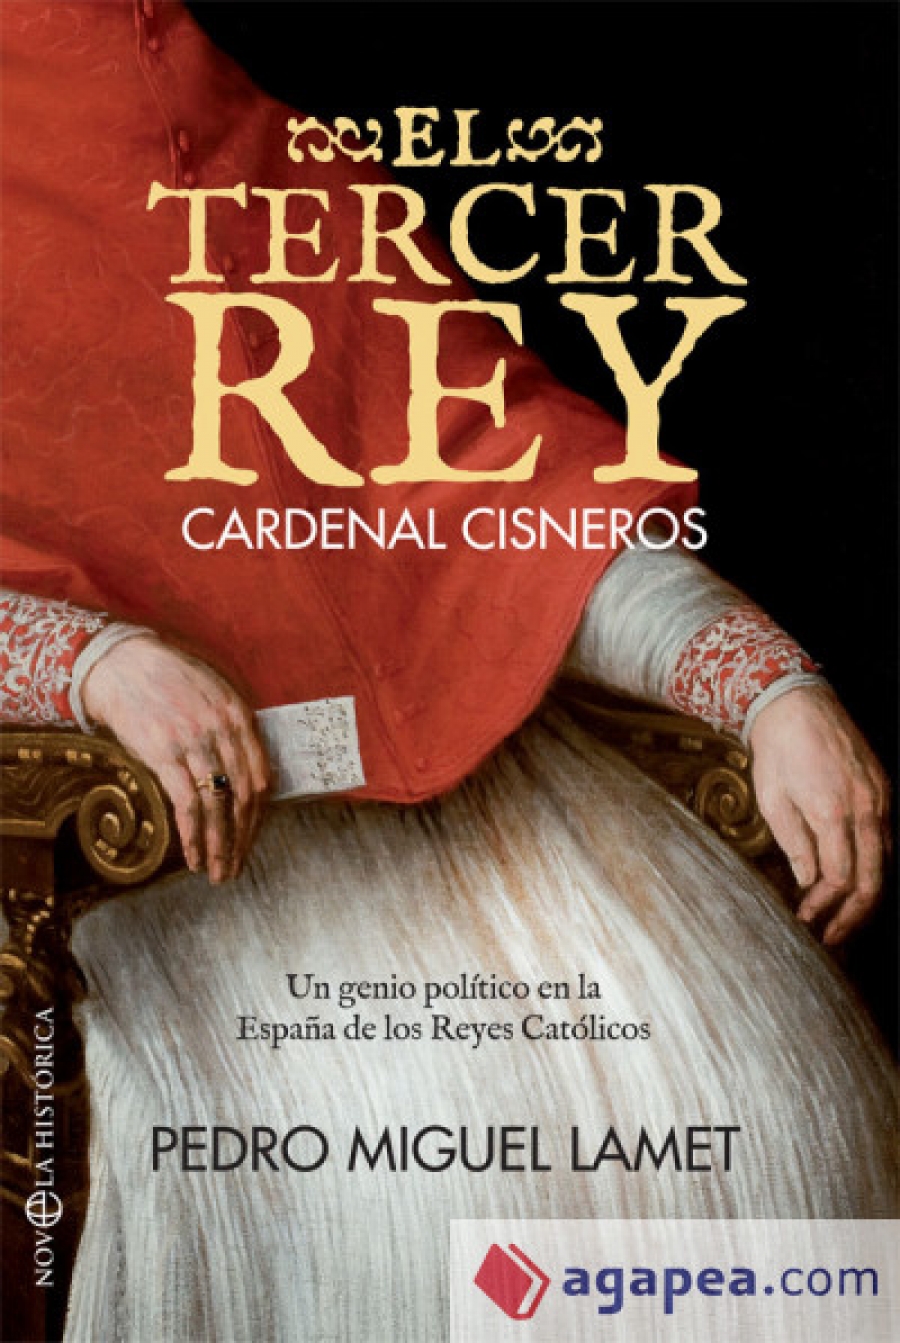 El cardenal Osoro presenta &#039;El tercer rey&#039;, primera novela histórica sobre la figura del cardenal Cisneros